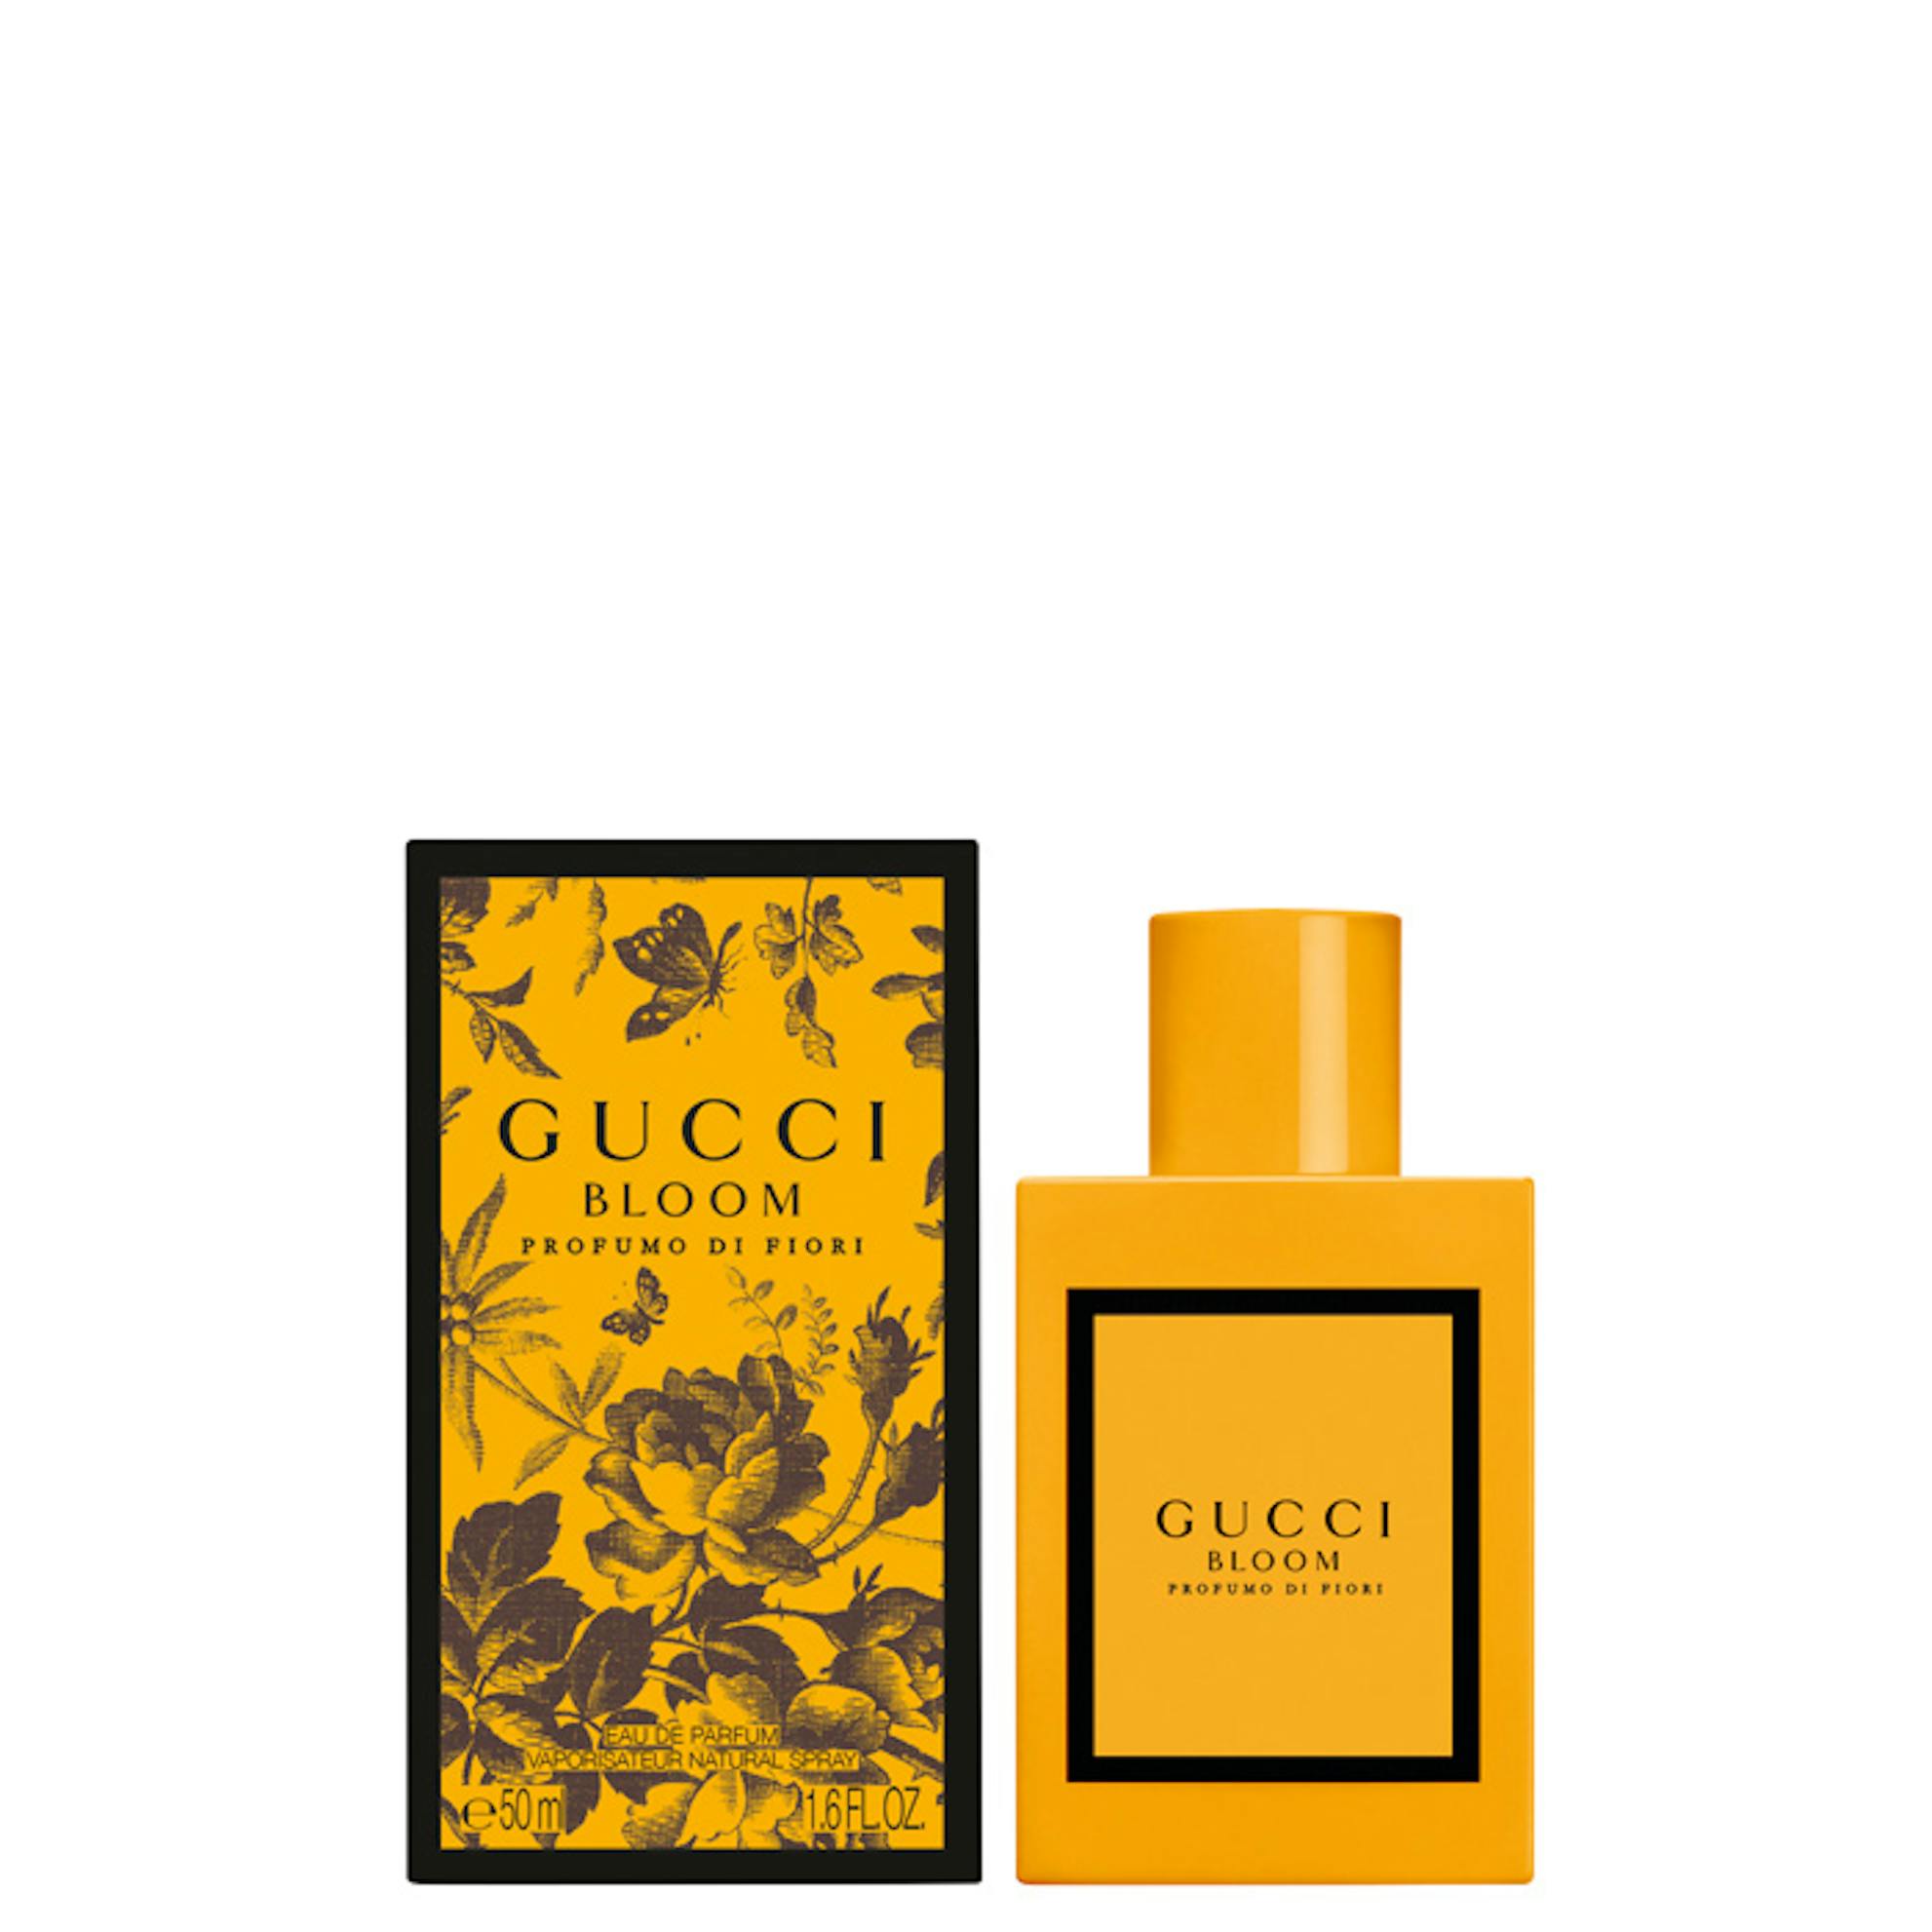 Shop Gucci Bloom Profumo di Fiori Eau de Parfum